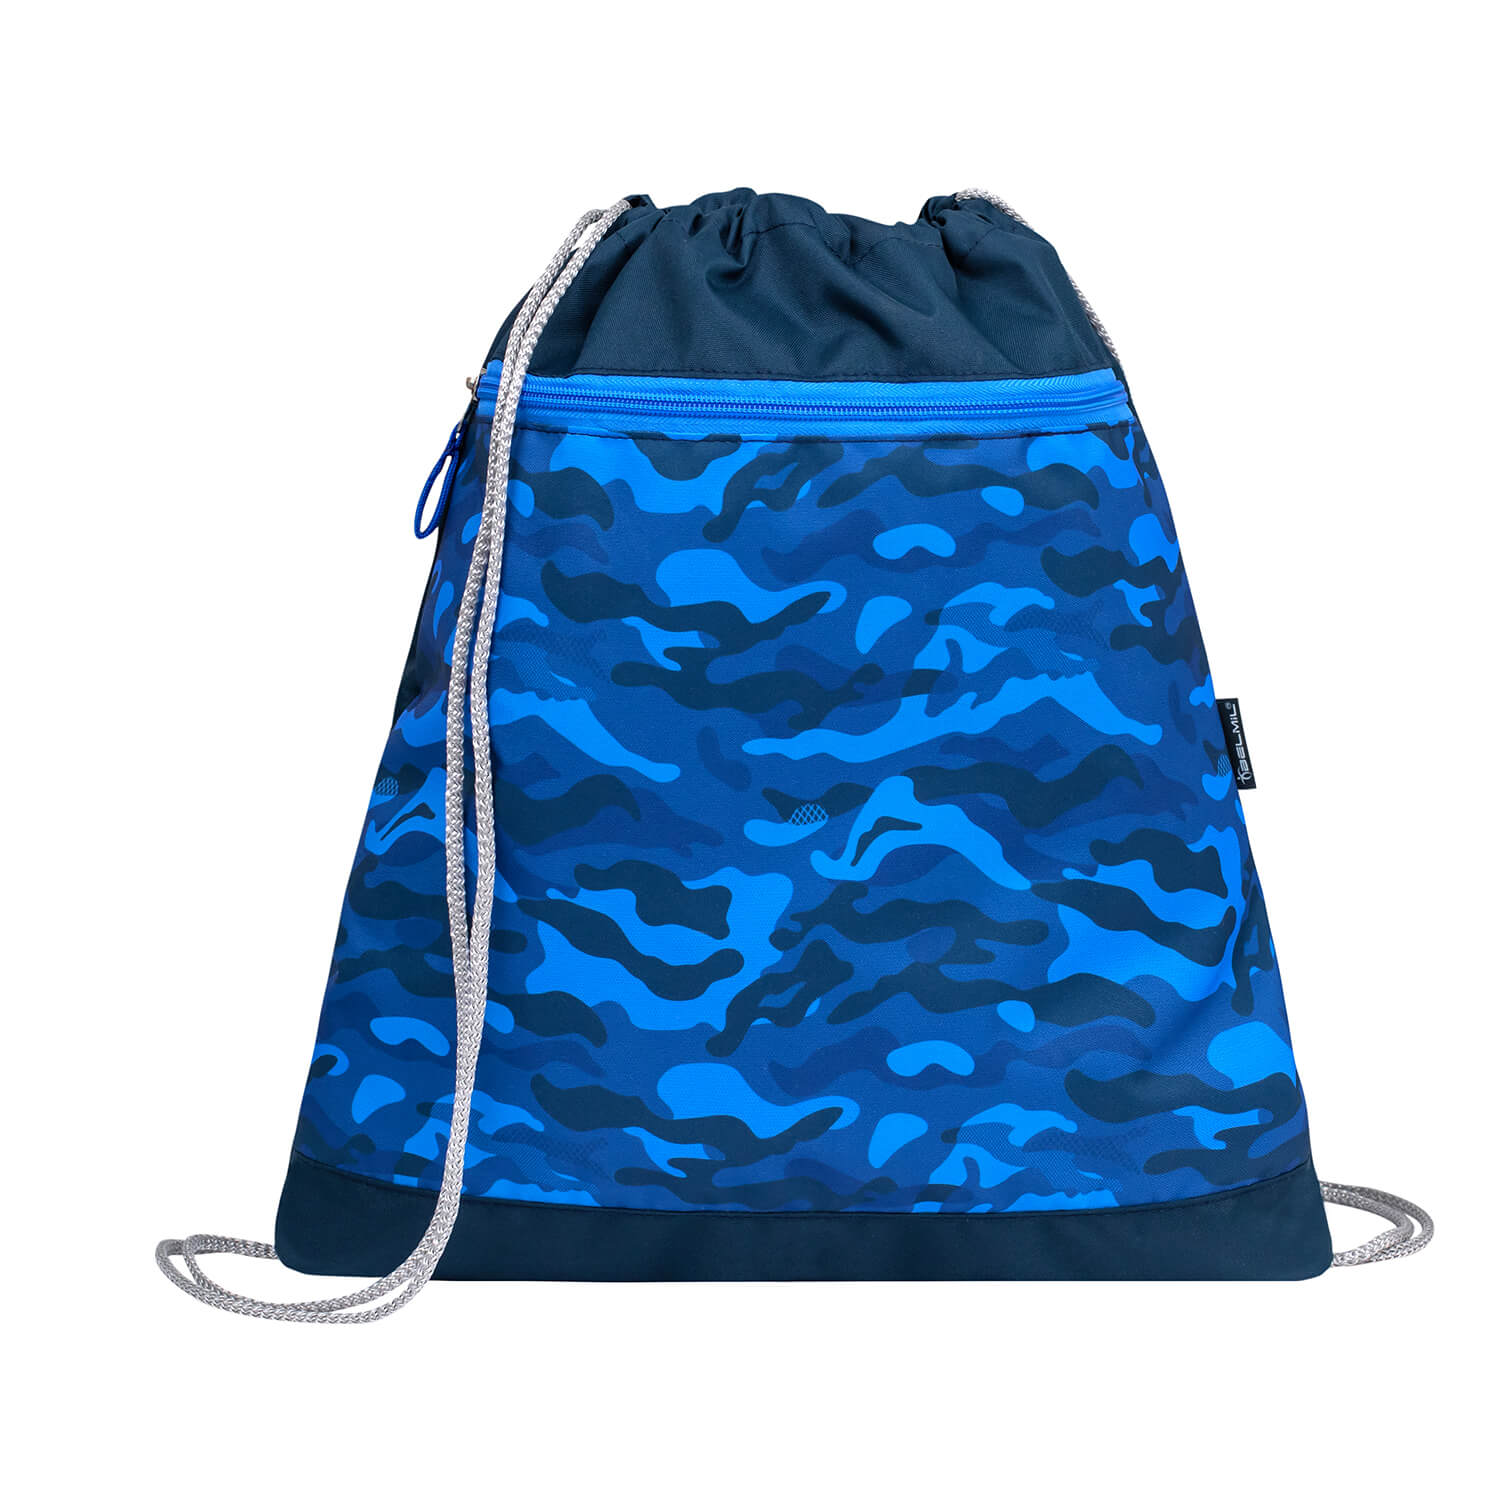 Classy Blue Camouflage schoolbag set 5 pcs